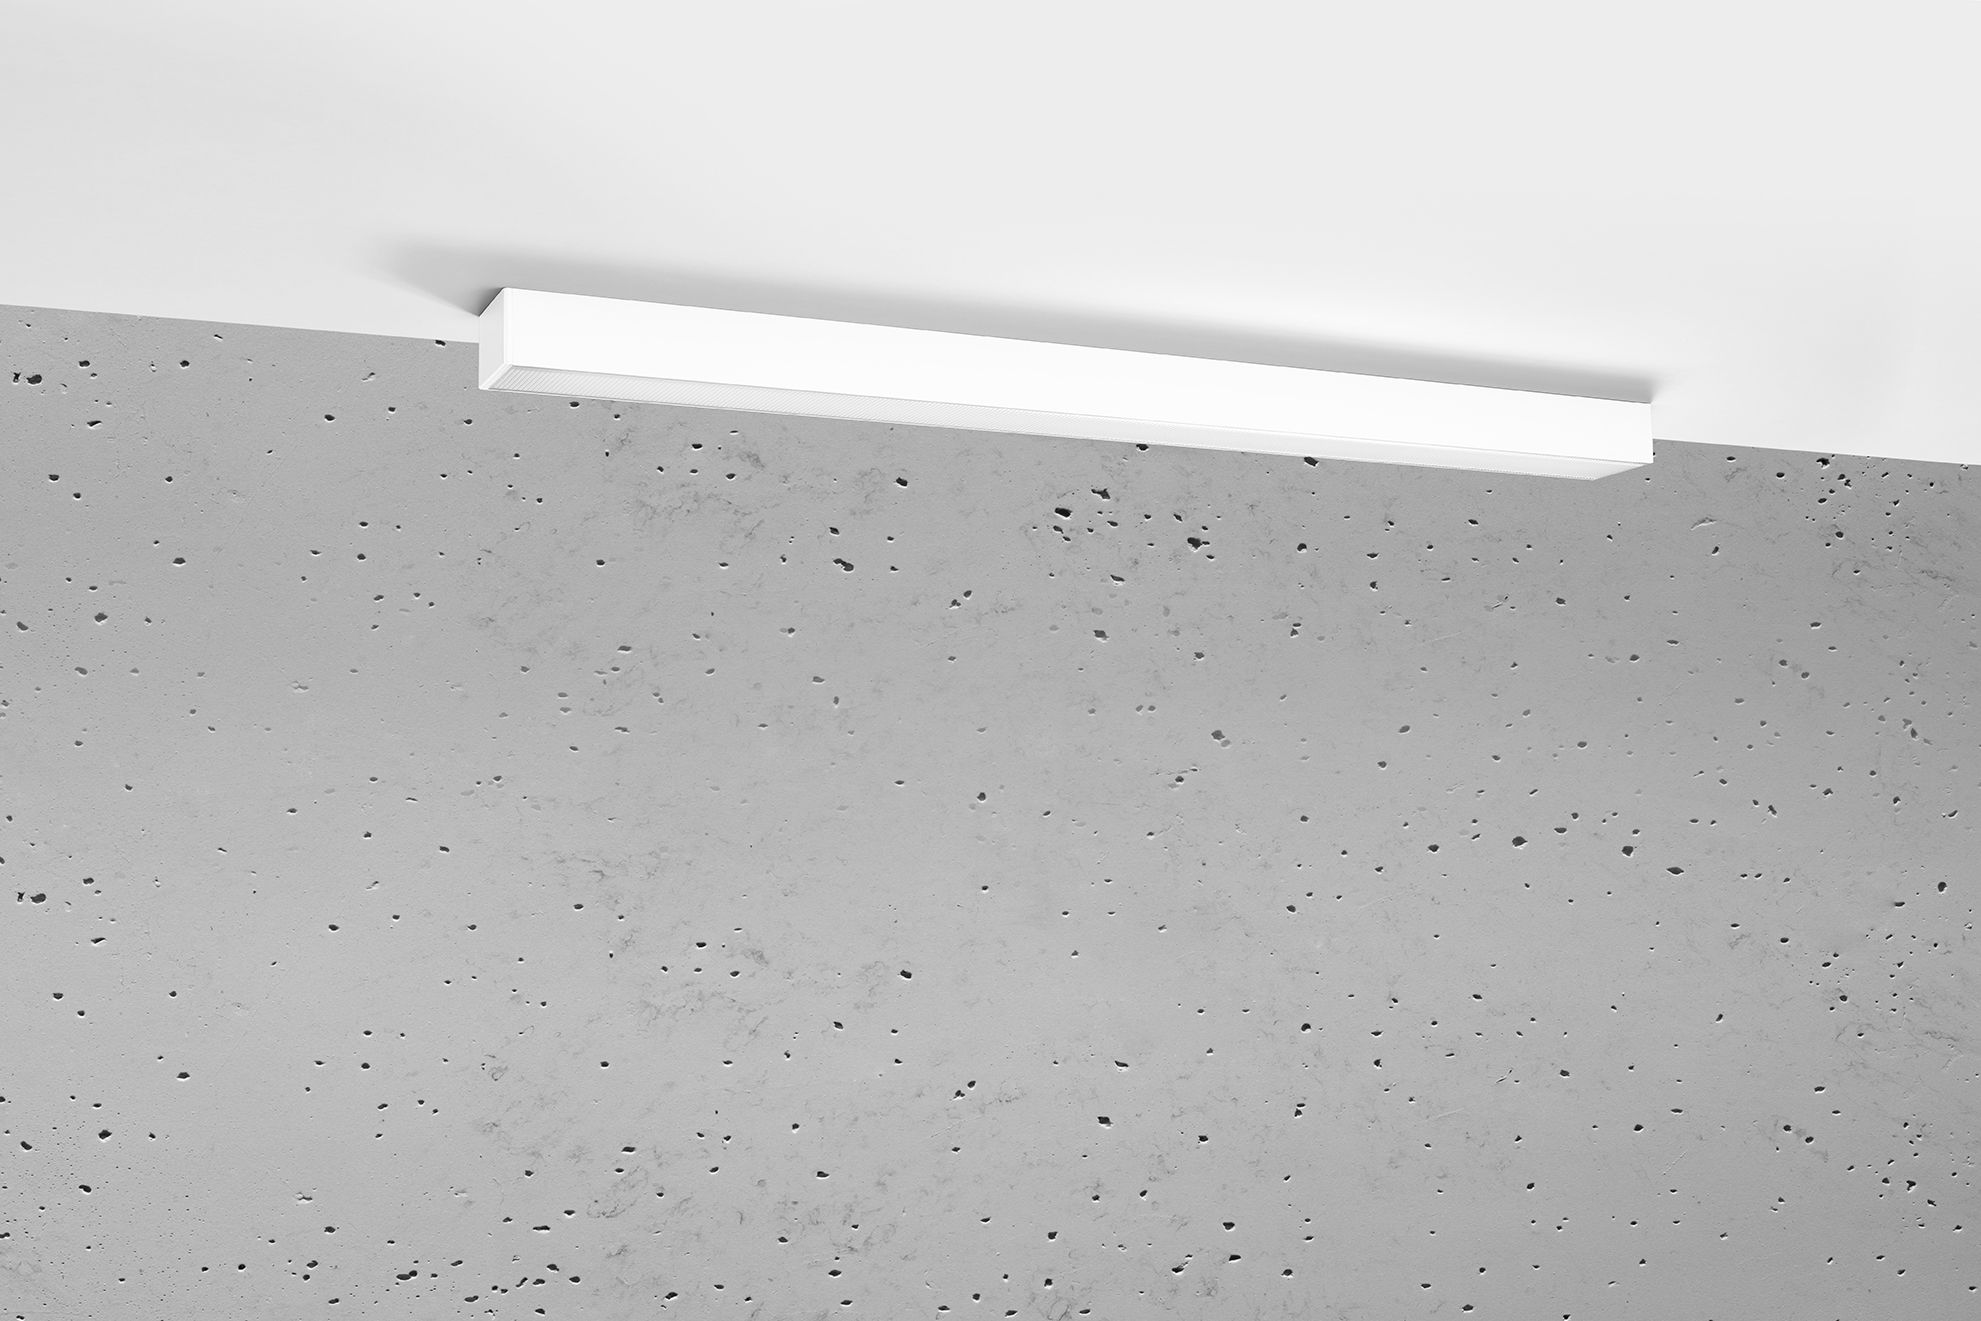 LED Deckenleuchte Weiß Metall 90 cm lang flach 4000 K